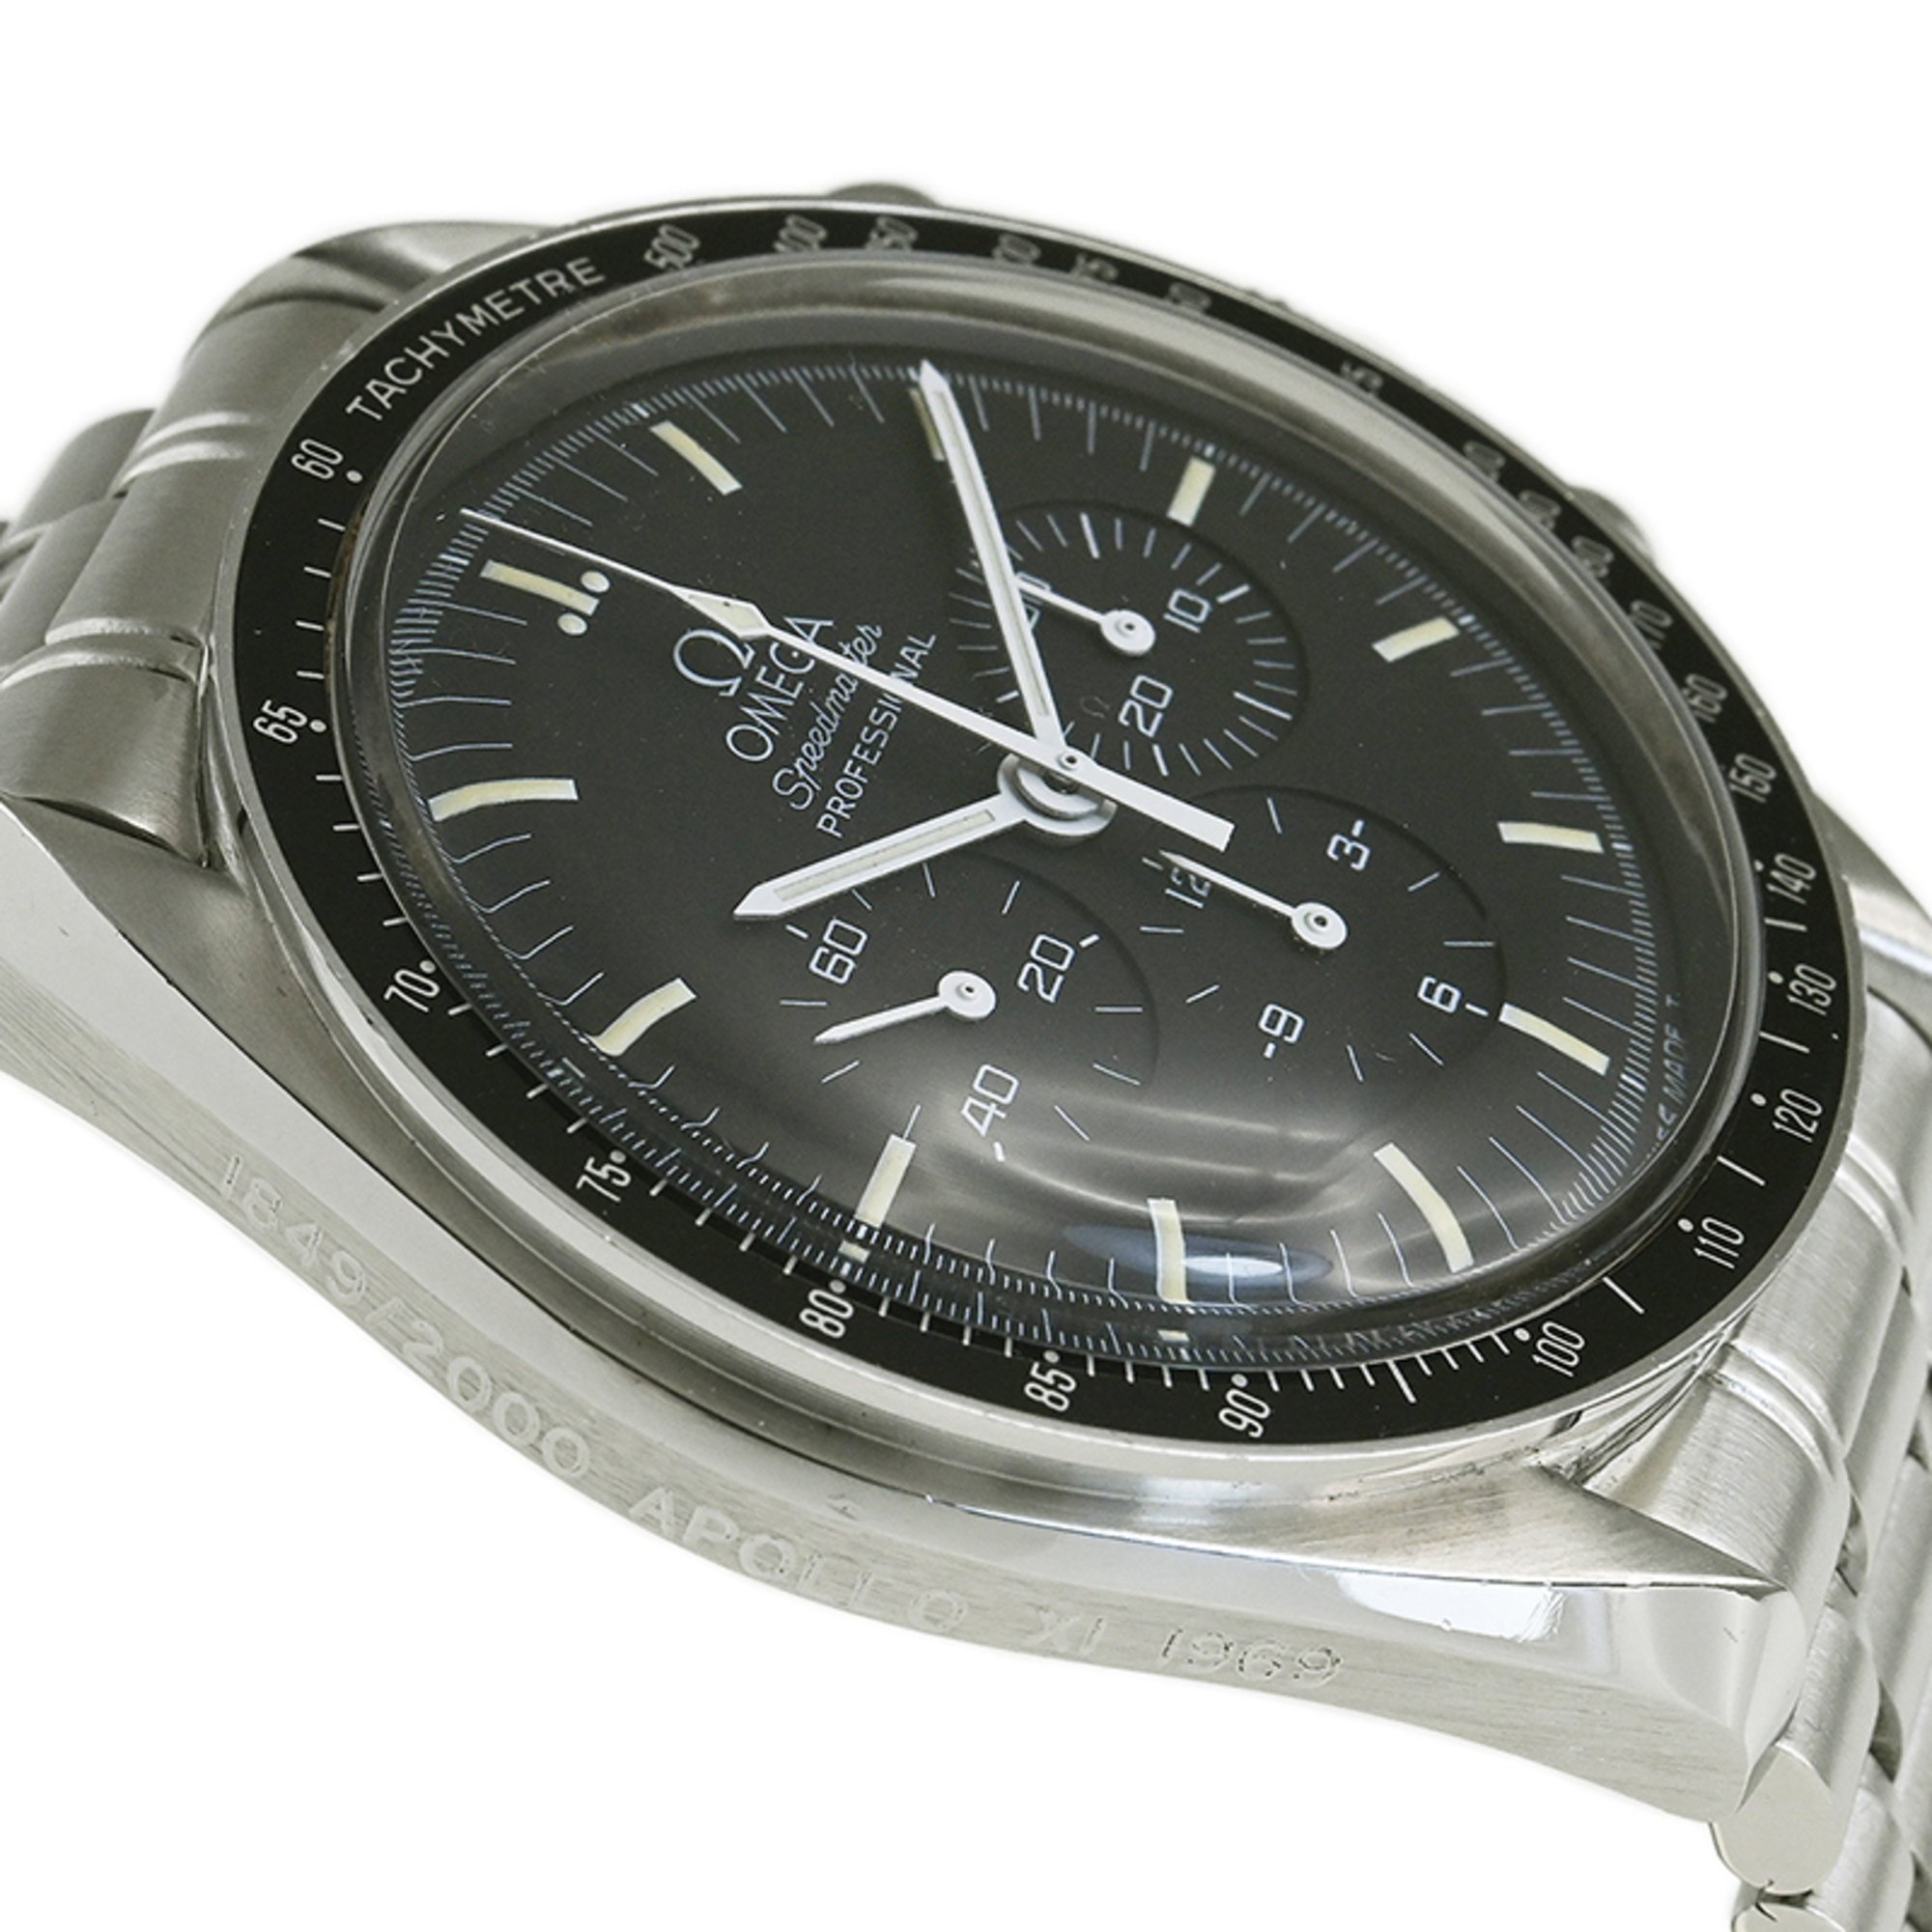 OMEGA Omega Speedmaster Professional Watch Apollo 11 Moon Landing 20th Anniversary US Limited 2000 3890.59